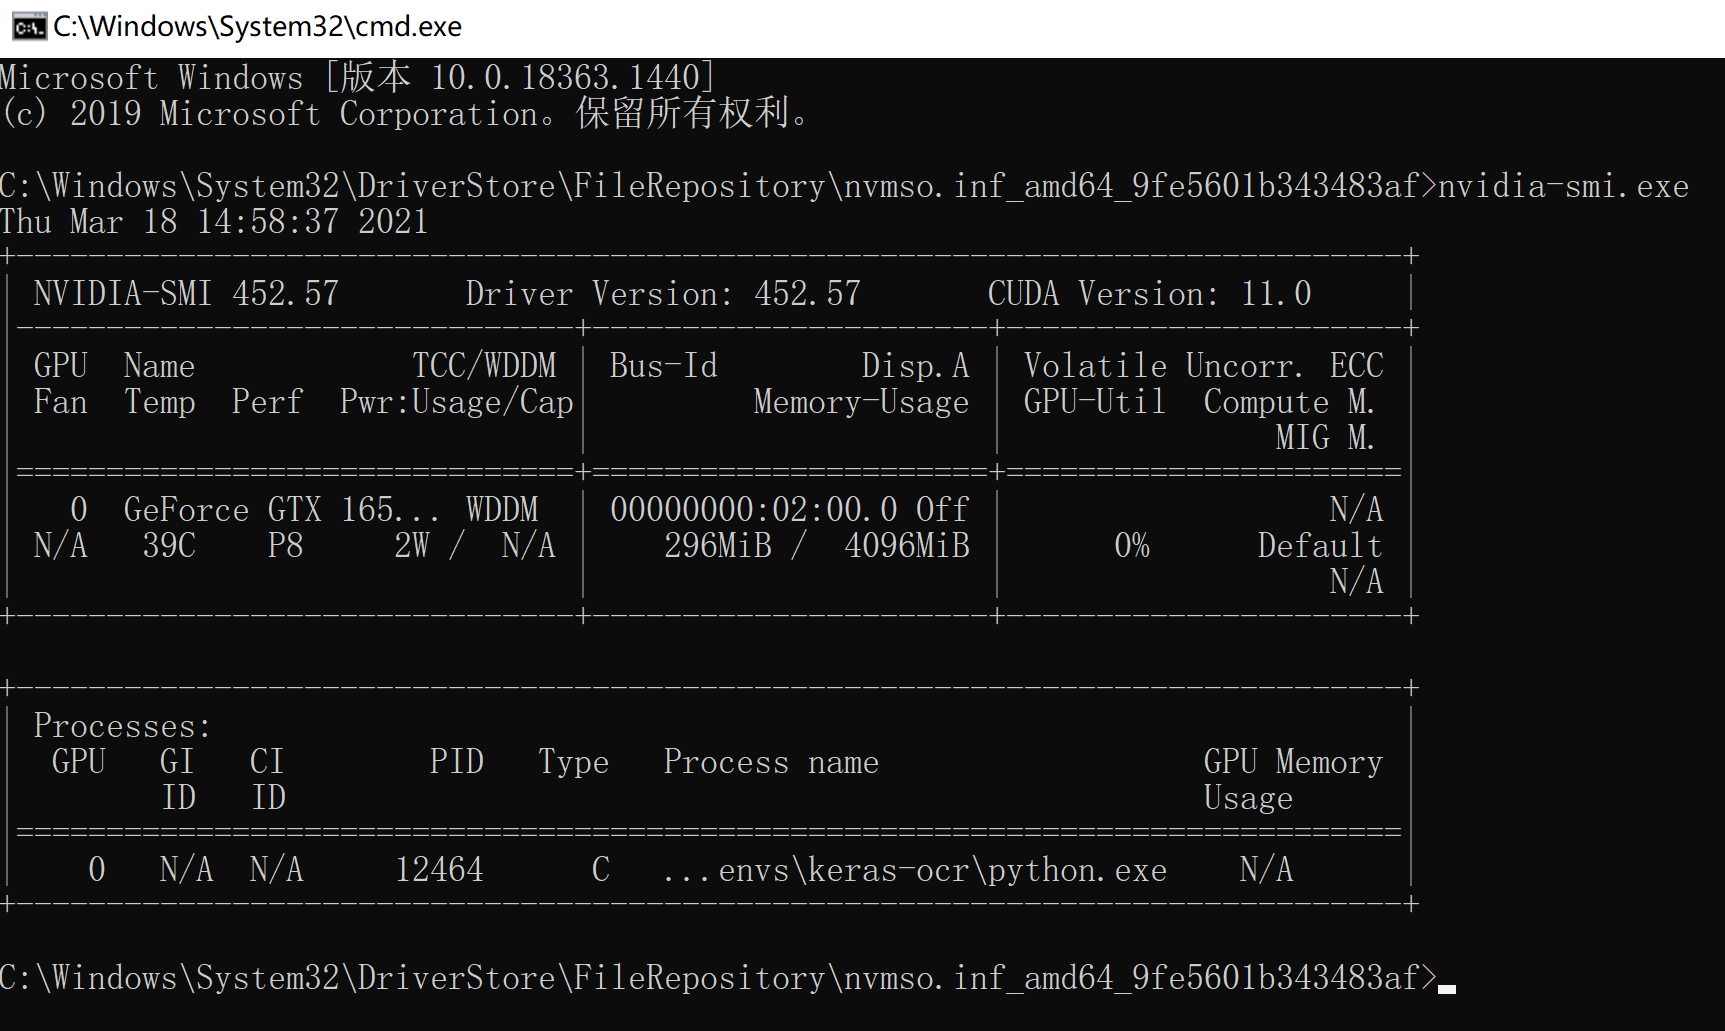 NVIDIA-SMI 525.85.12. Torch Version CUDA. NVIDIA-SMI CUDNN Version. Torch not compiled with CUDA enabled. Skip torch cuda test